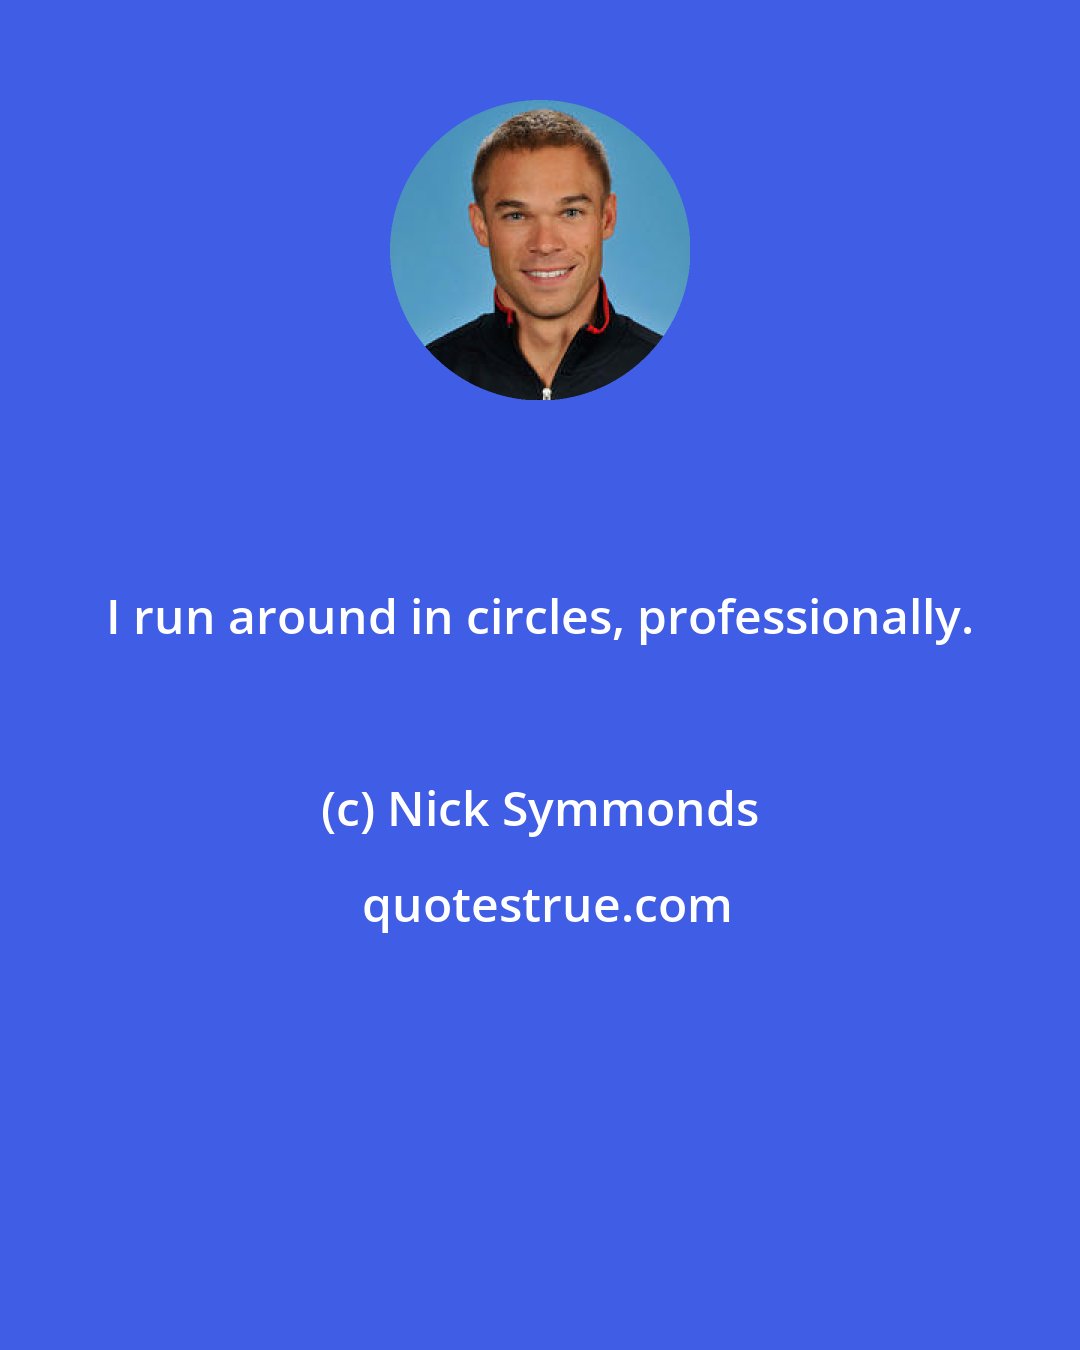 Nick Symmonds: I run around in circles, professionally.